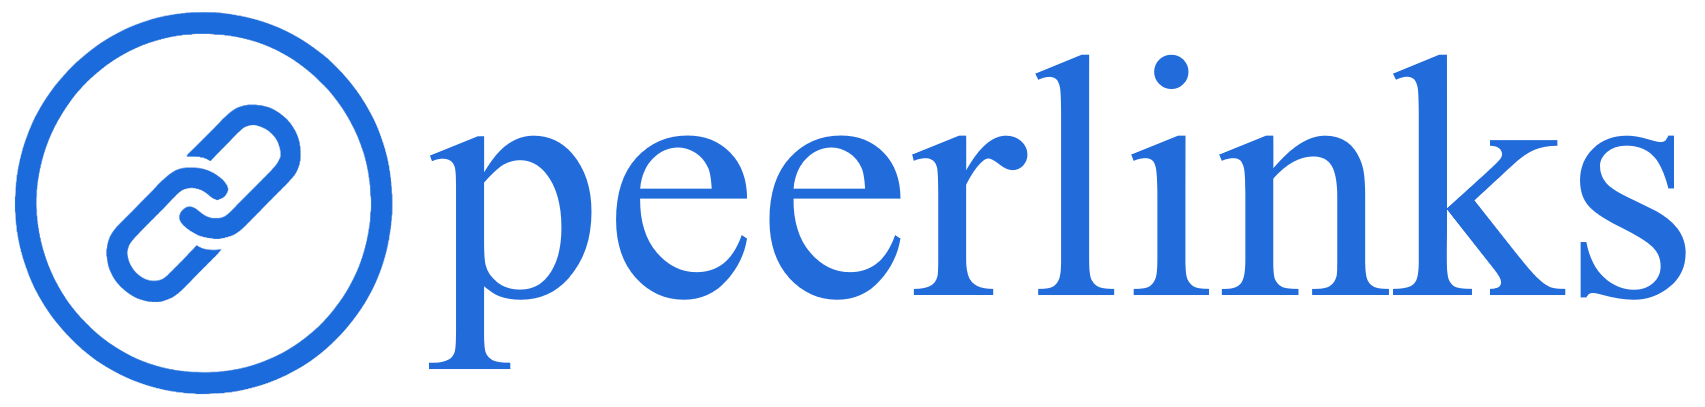 peerlinks logo